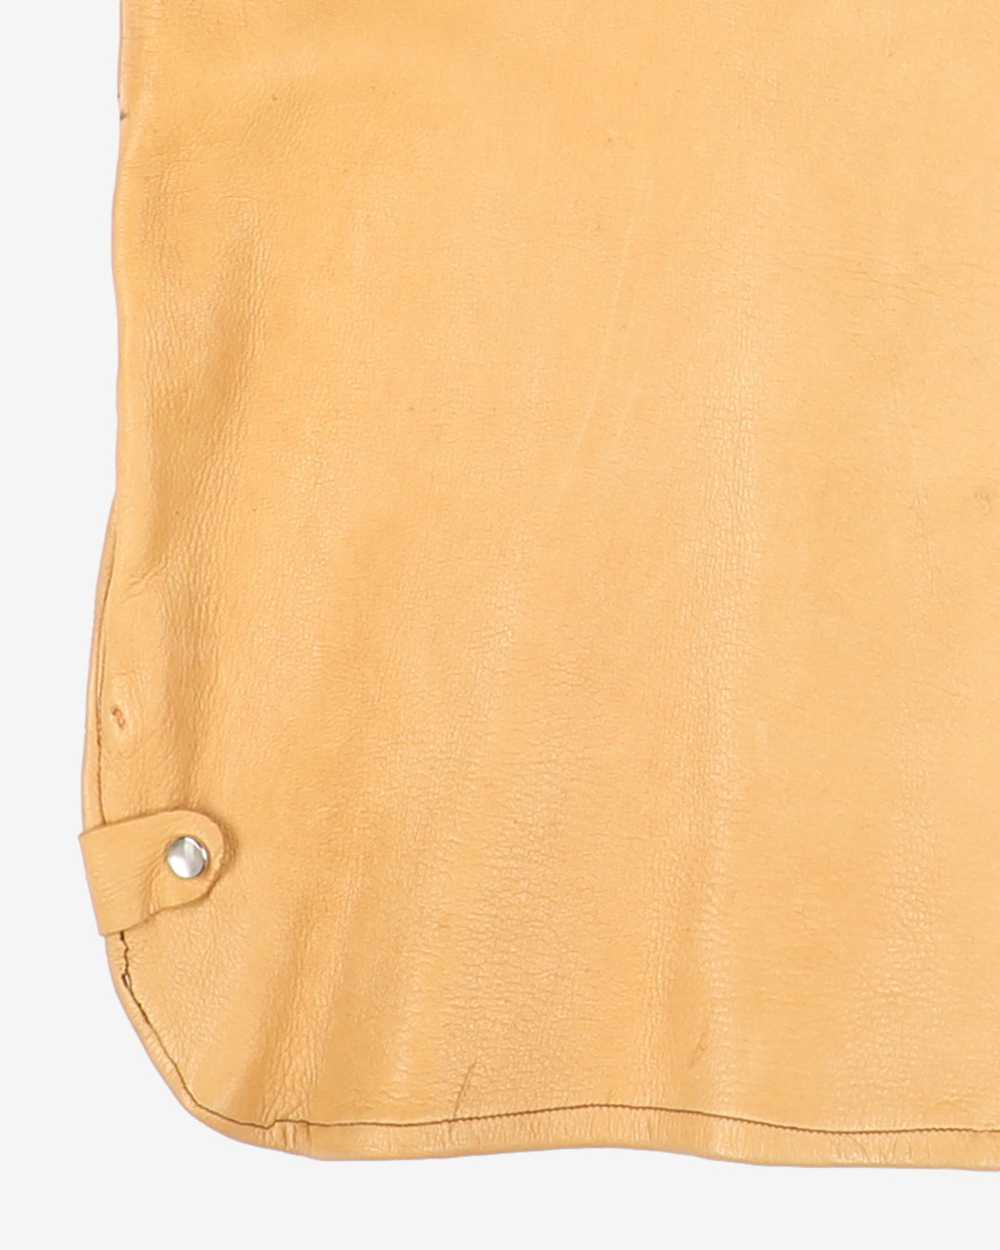 Vintage 1950s Buckskin Leather Jacket - L - image 4